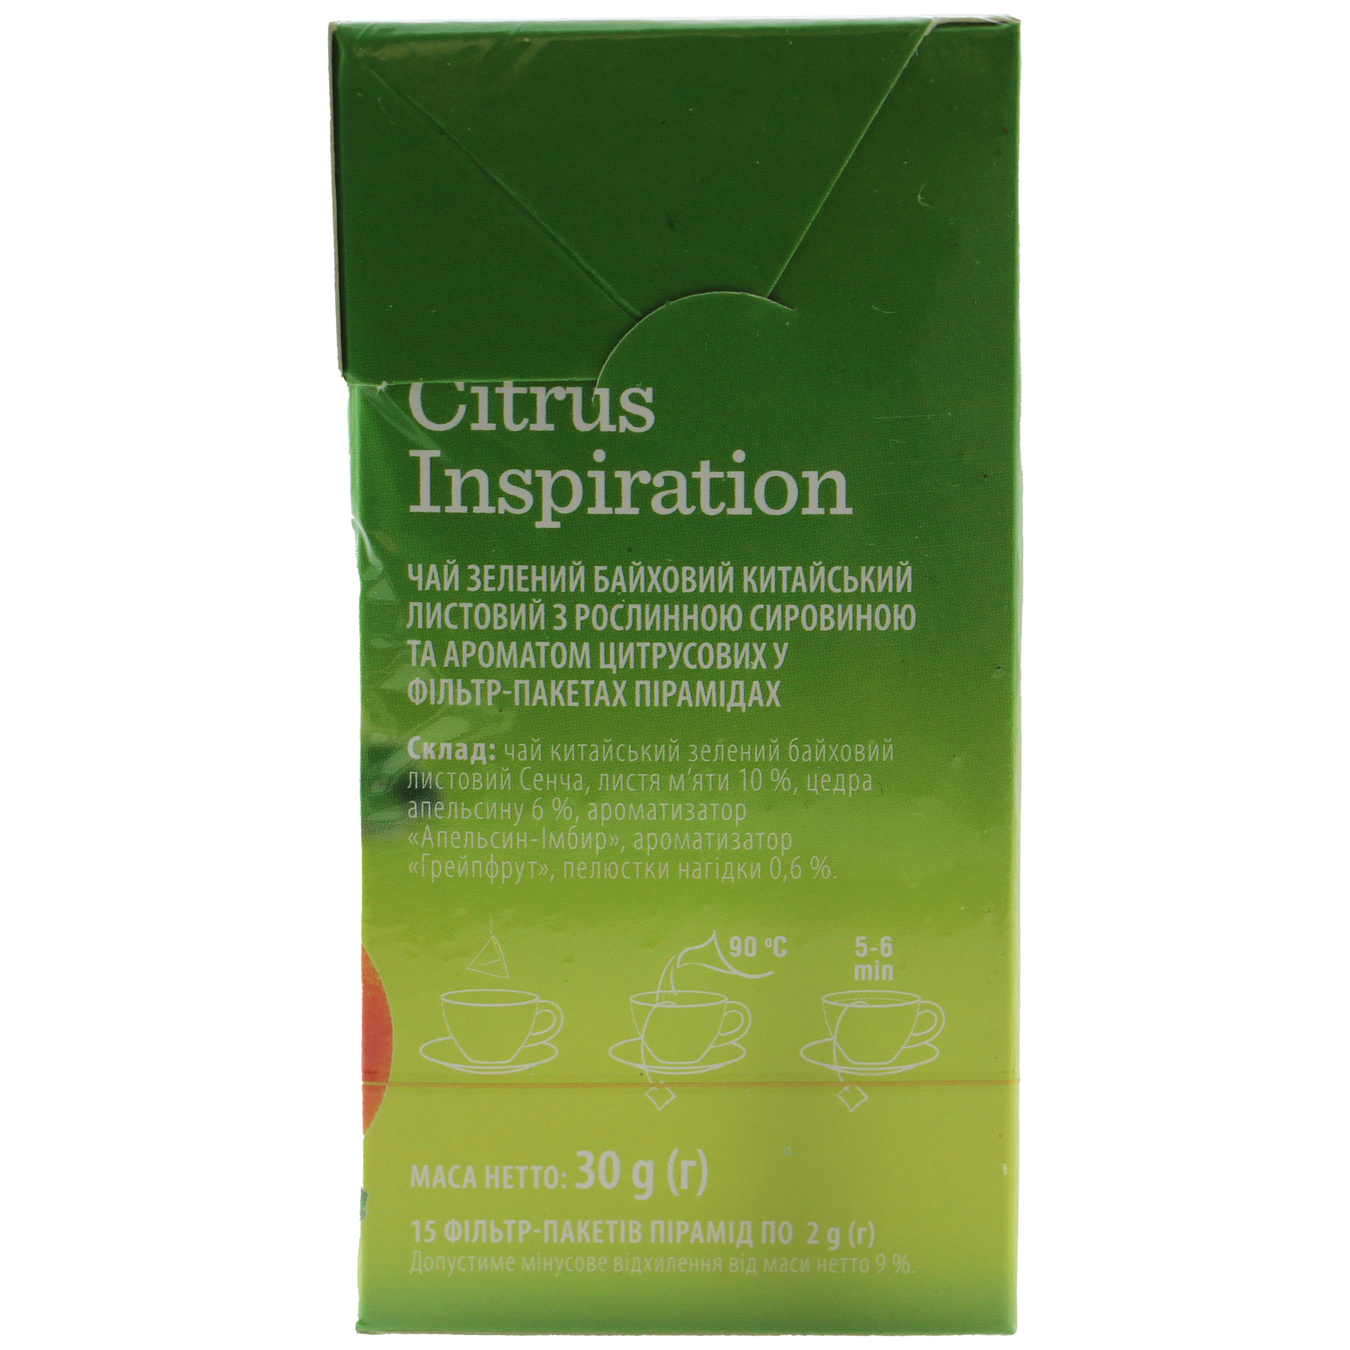 Novus Citrus Inspiration Chinese Green Tea with Citrus Aroma 2g*15pcs 2